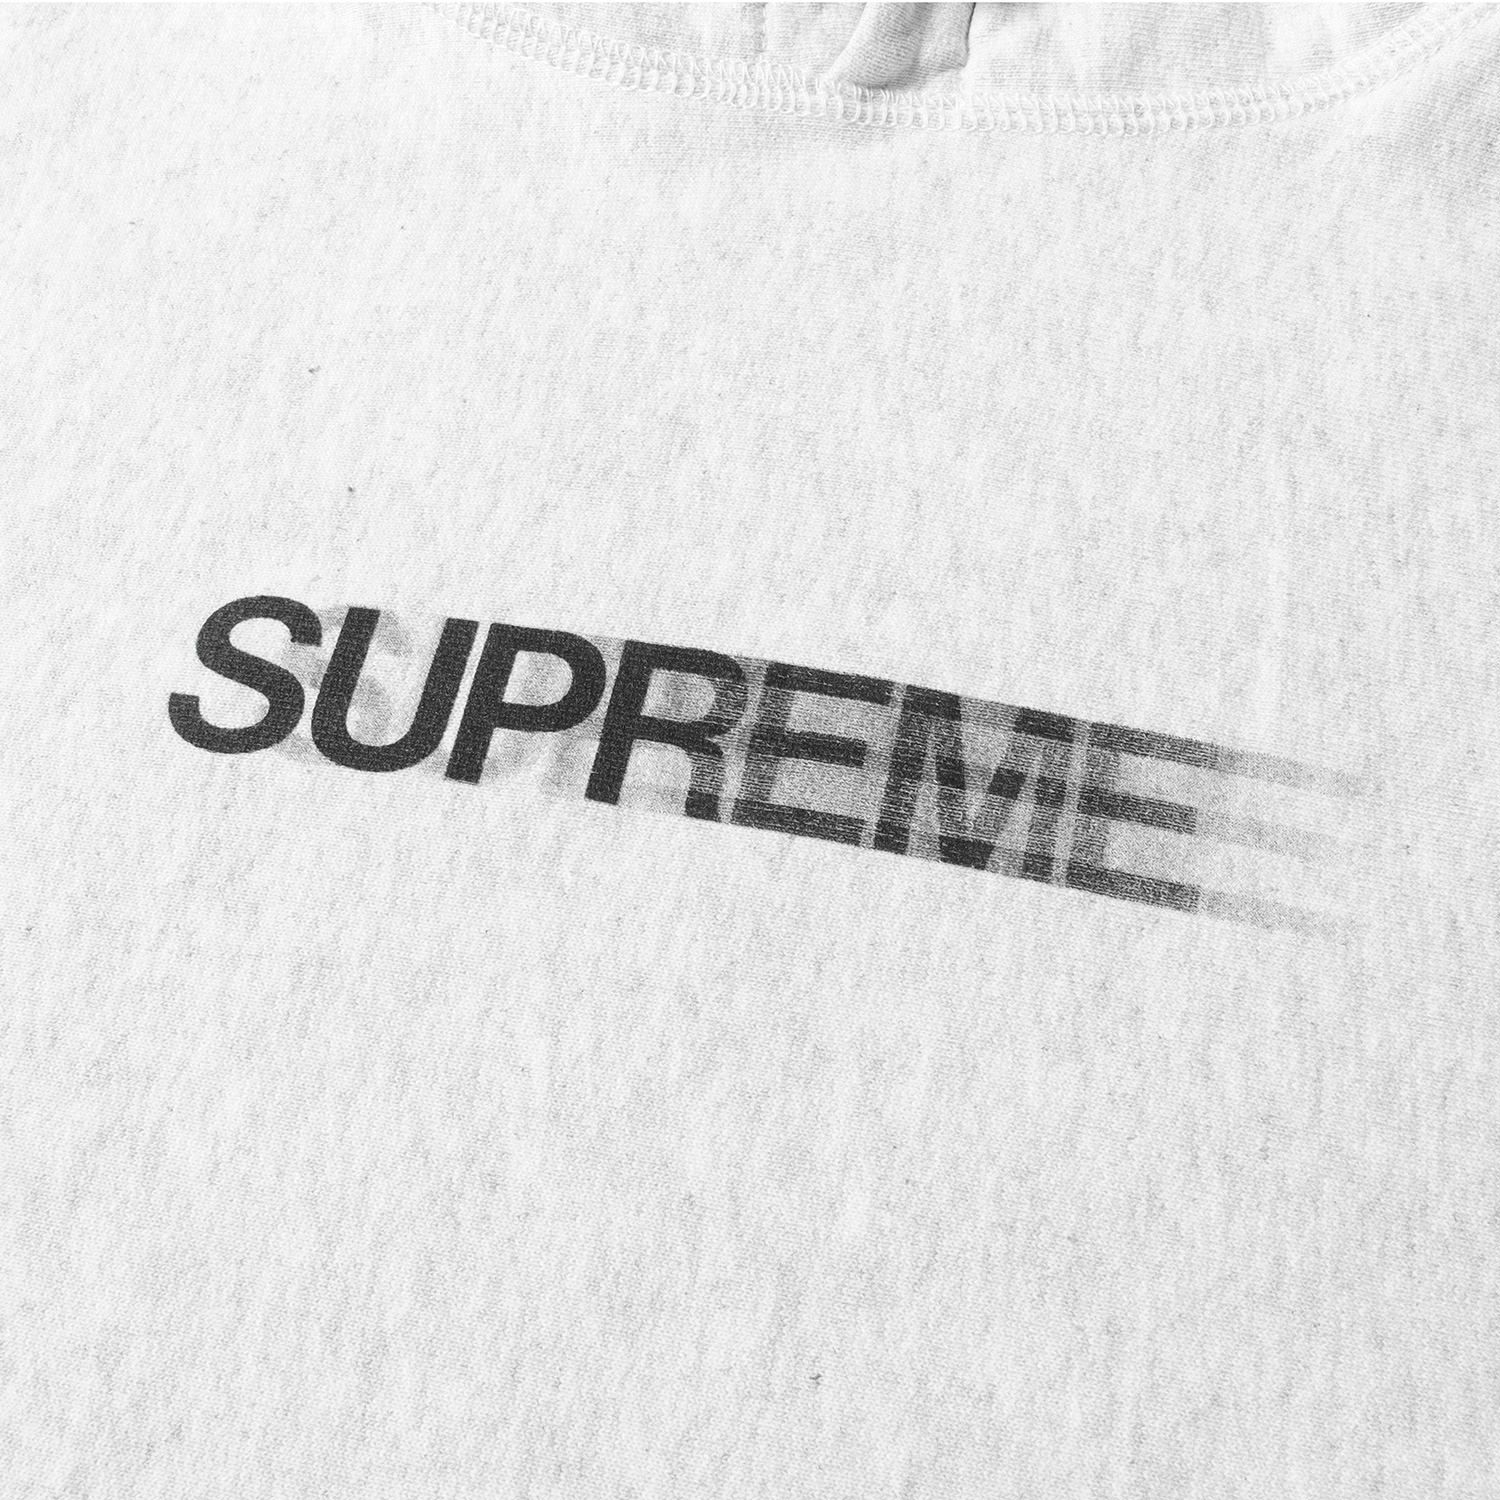 Tシャツ/カットソー(半袖/袖なし)Supreme 20SS Motion Logo Tee M グレー